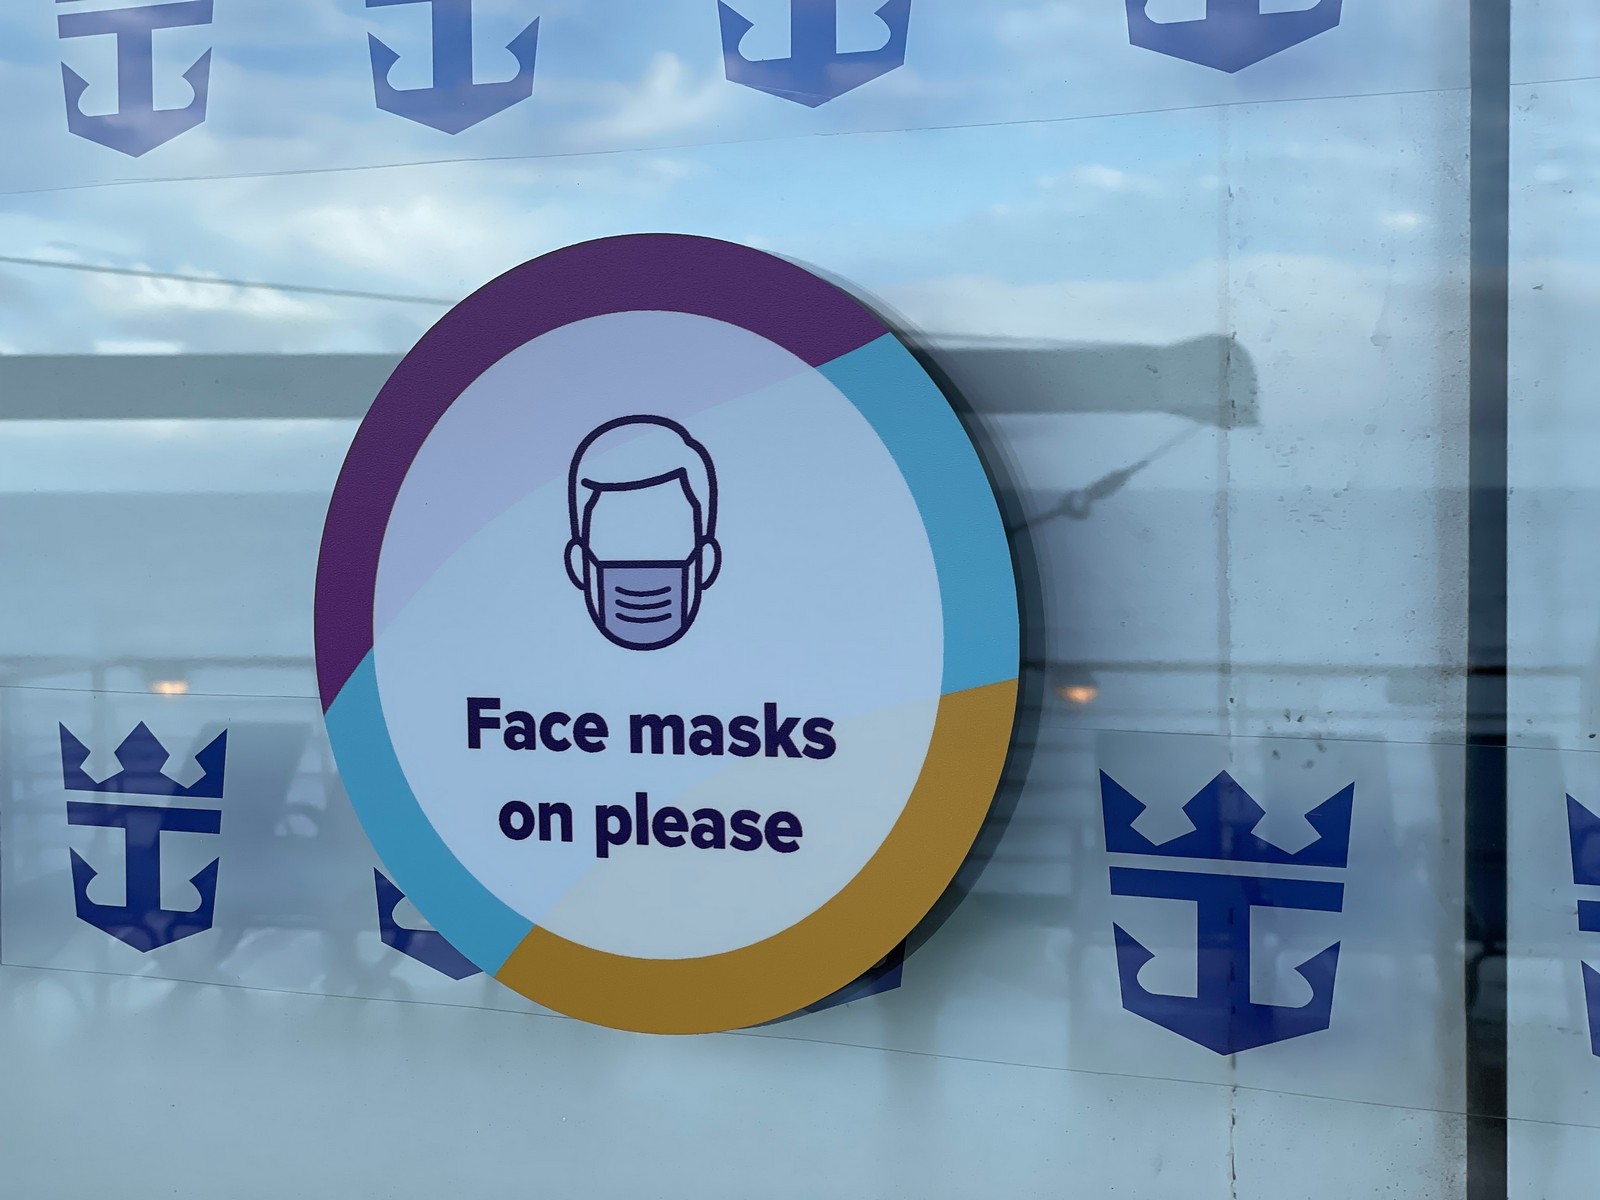 Royal Caribbean extends stricter face mask protocols until January 31, 2022